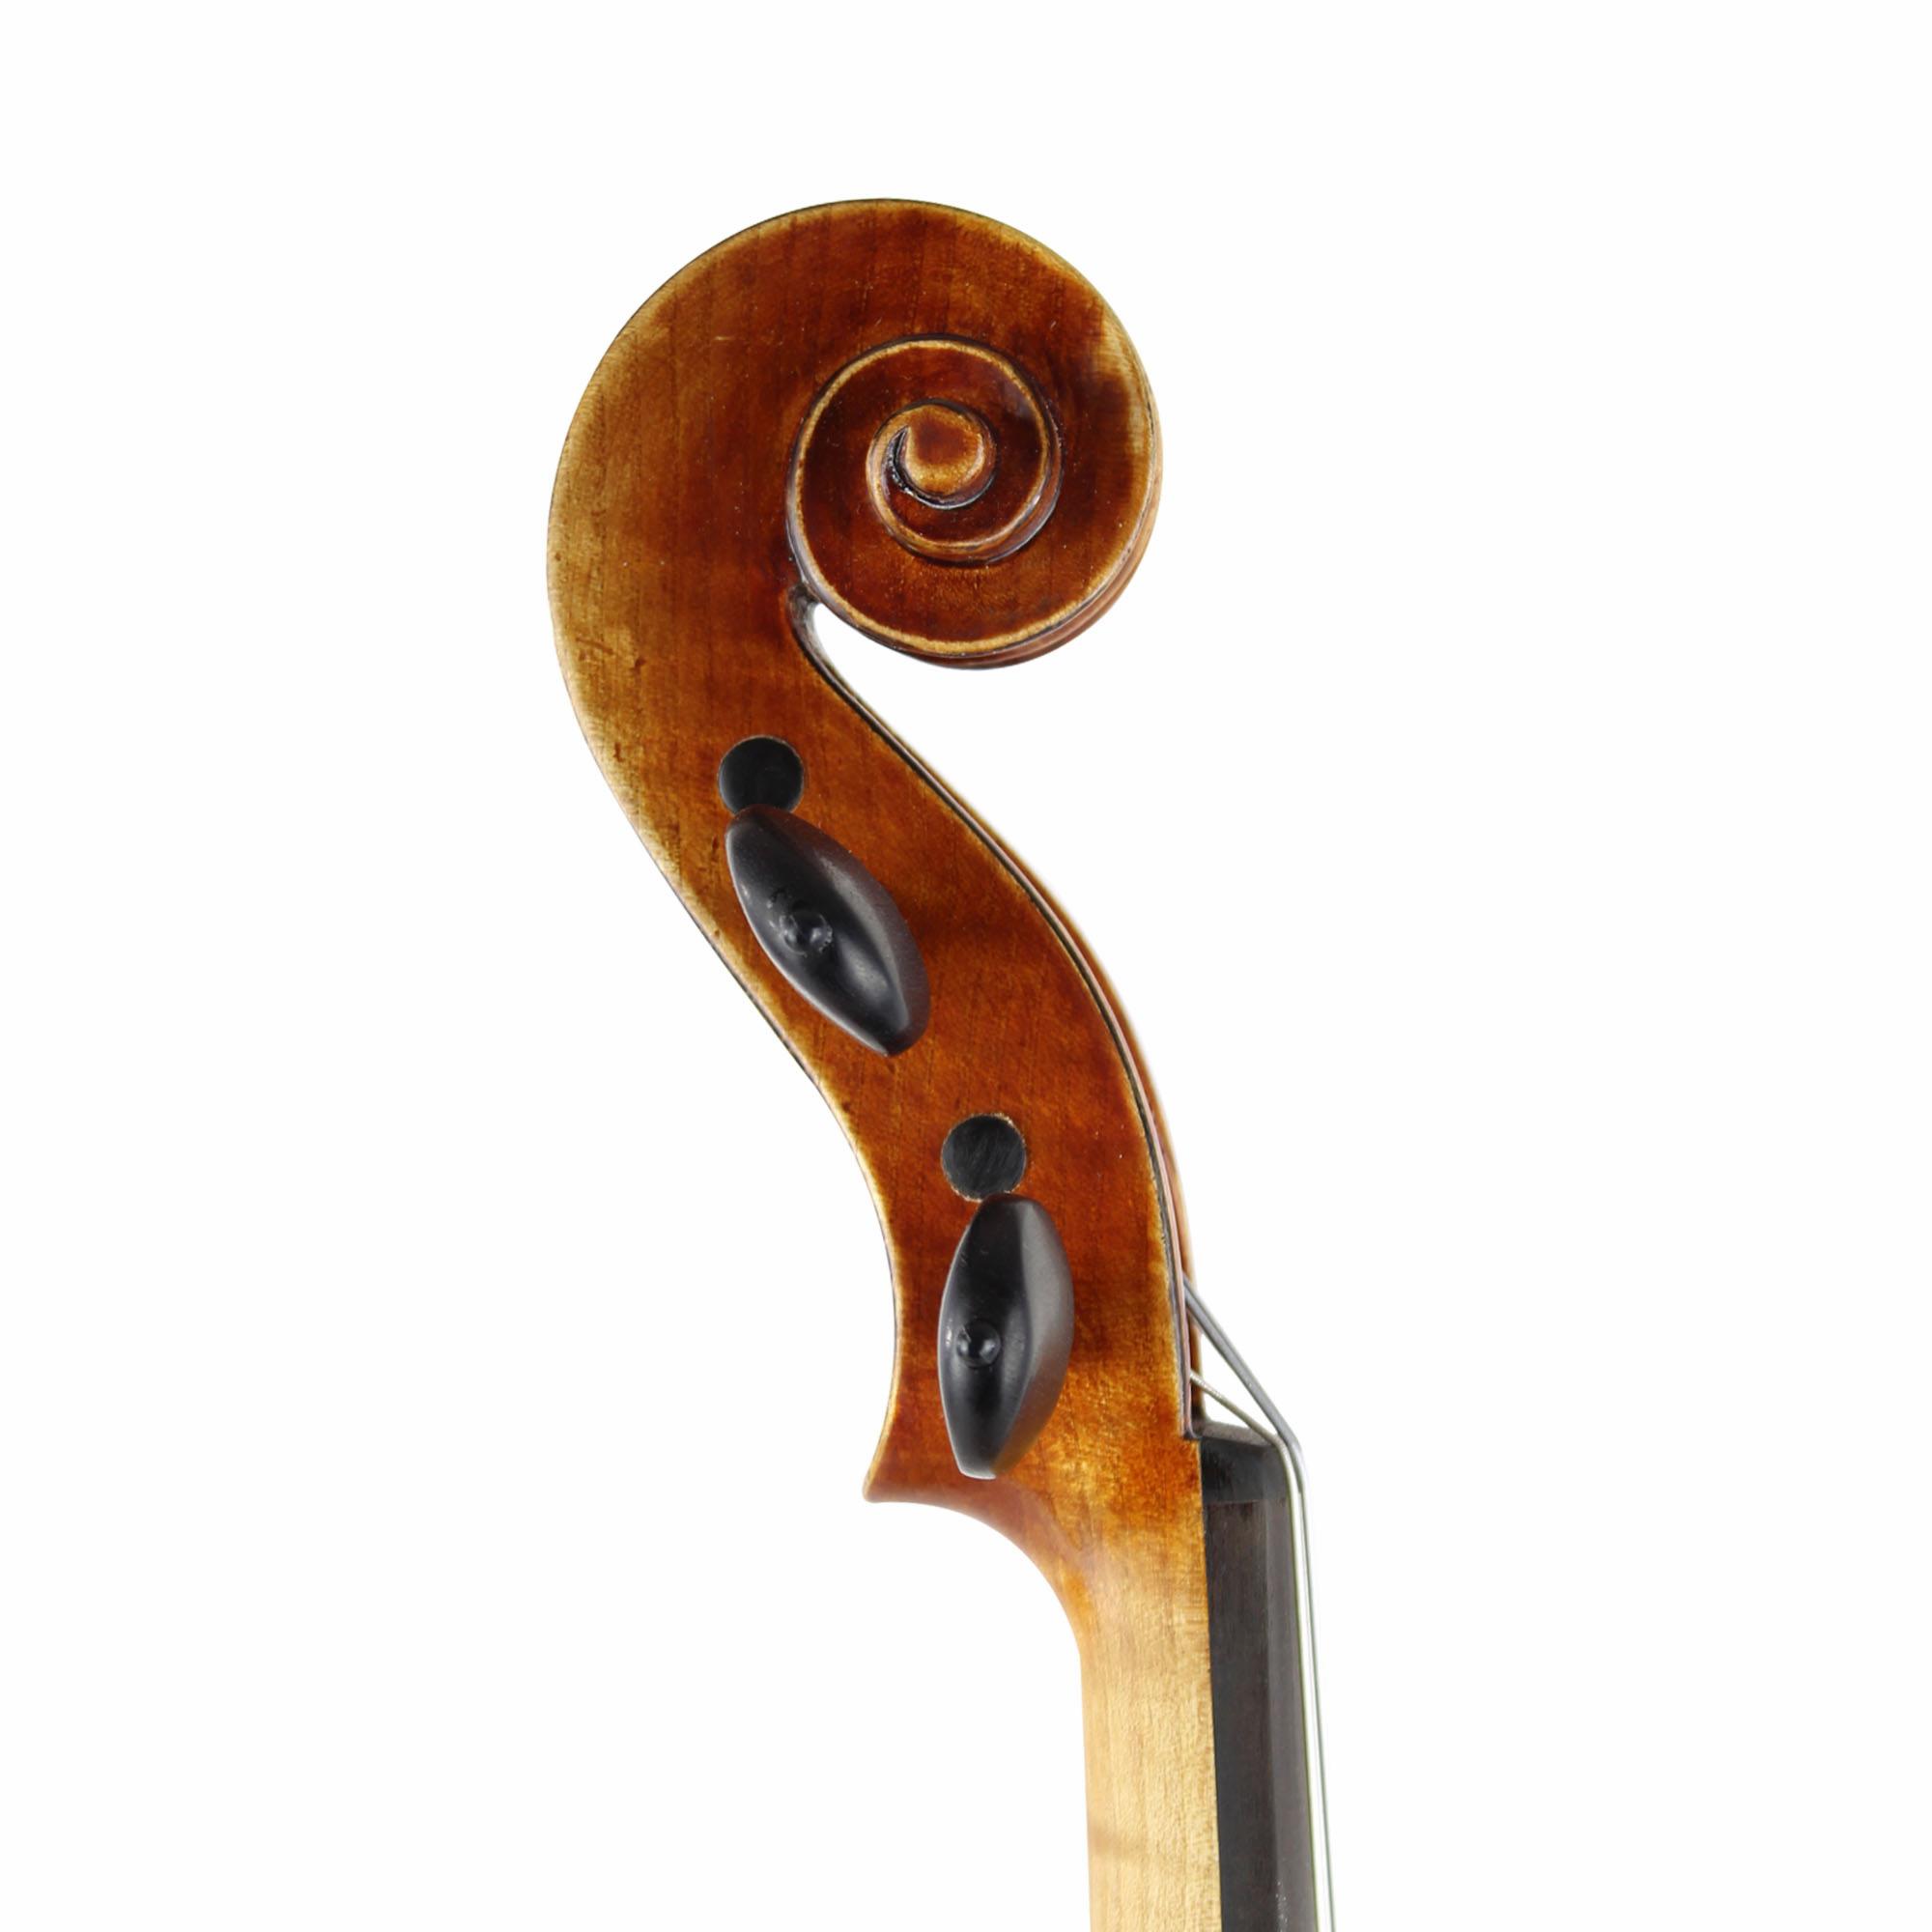 Jascha Heifetz JH400 Violin